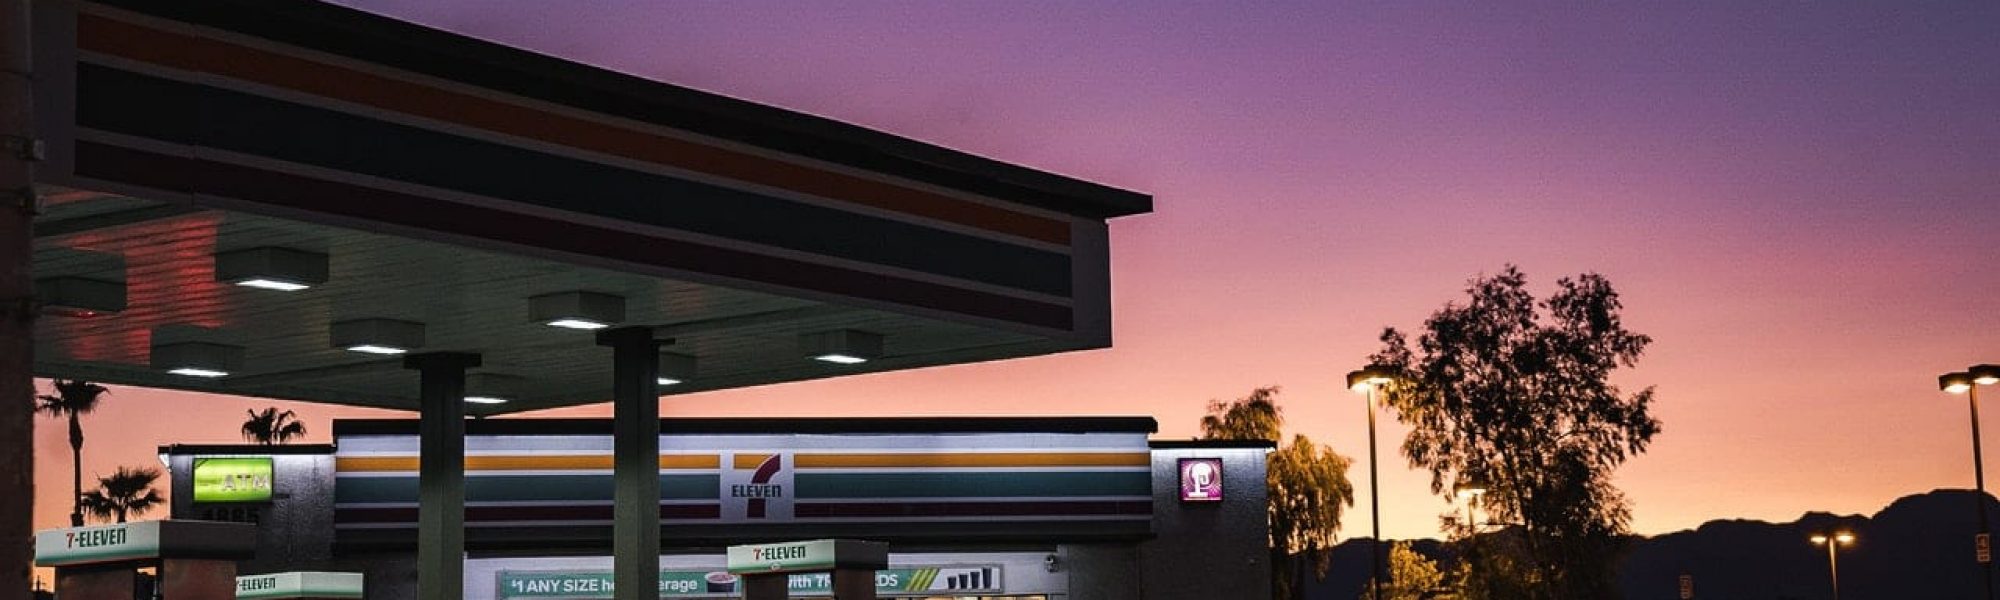 7-11 gas station at dusk